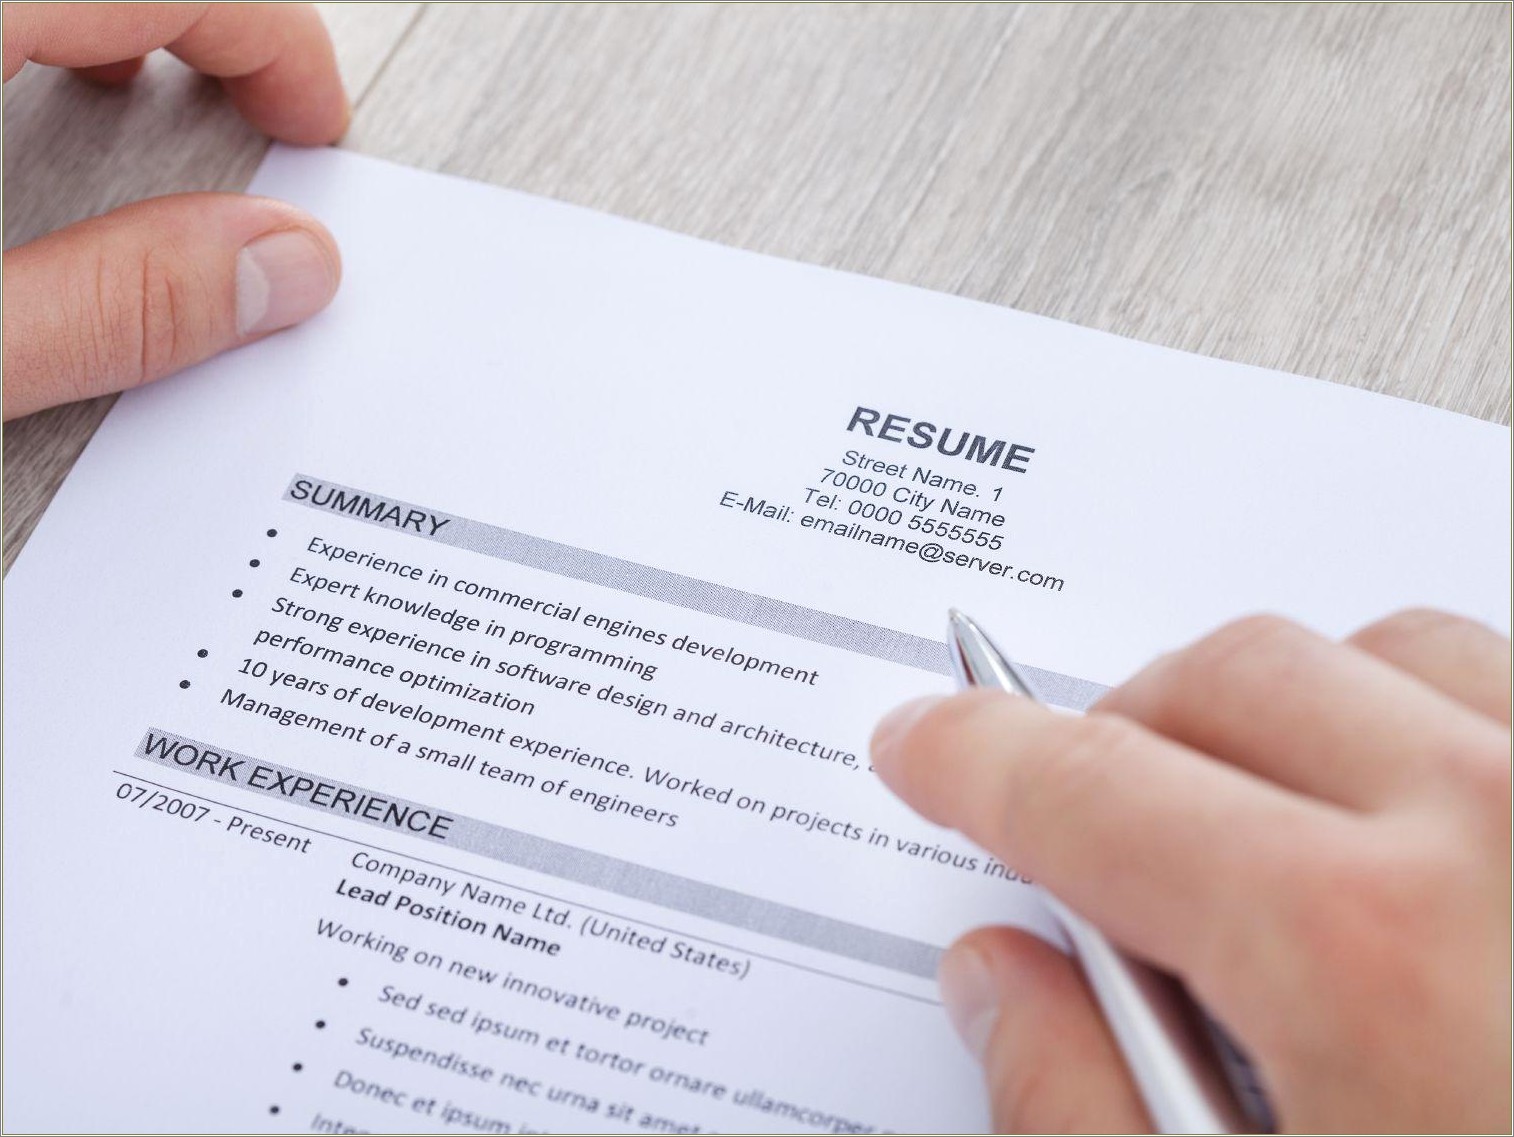 Resume Objective Seeking Employment Leadership Hands On